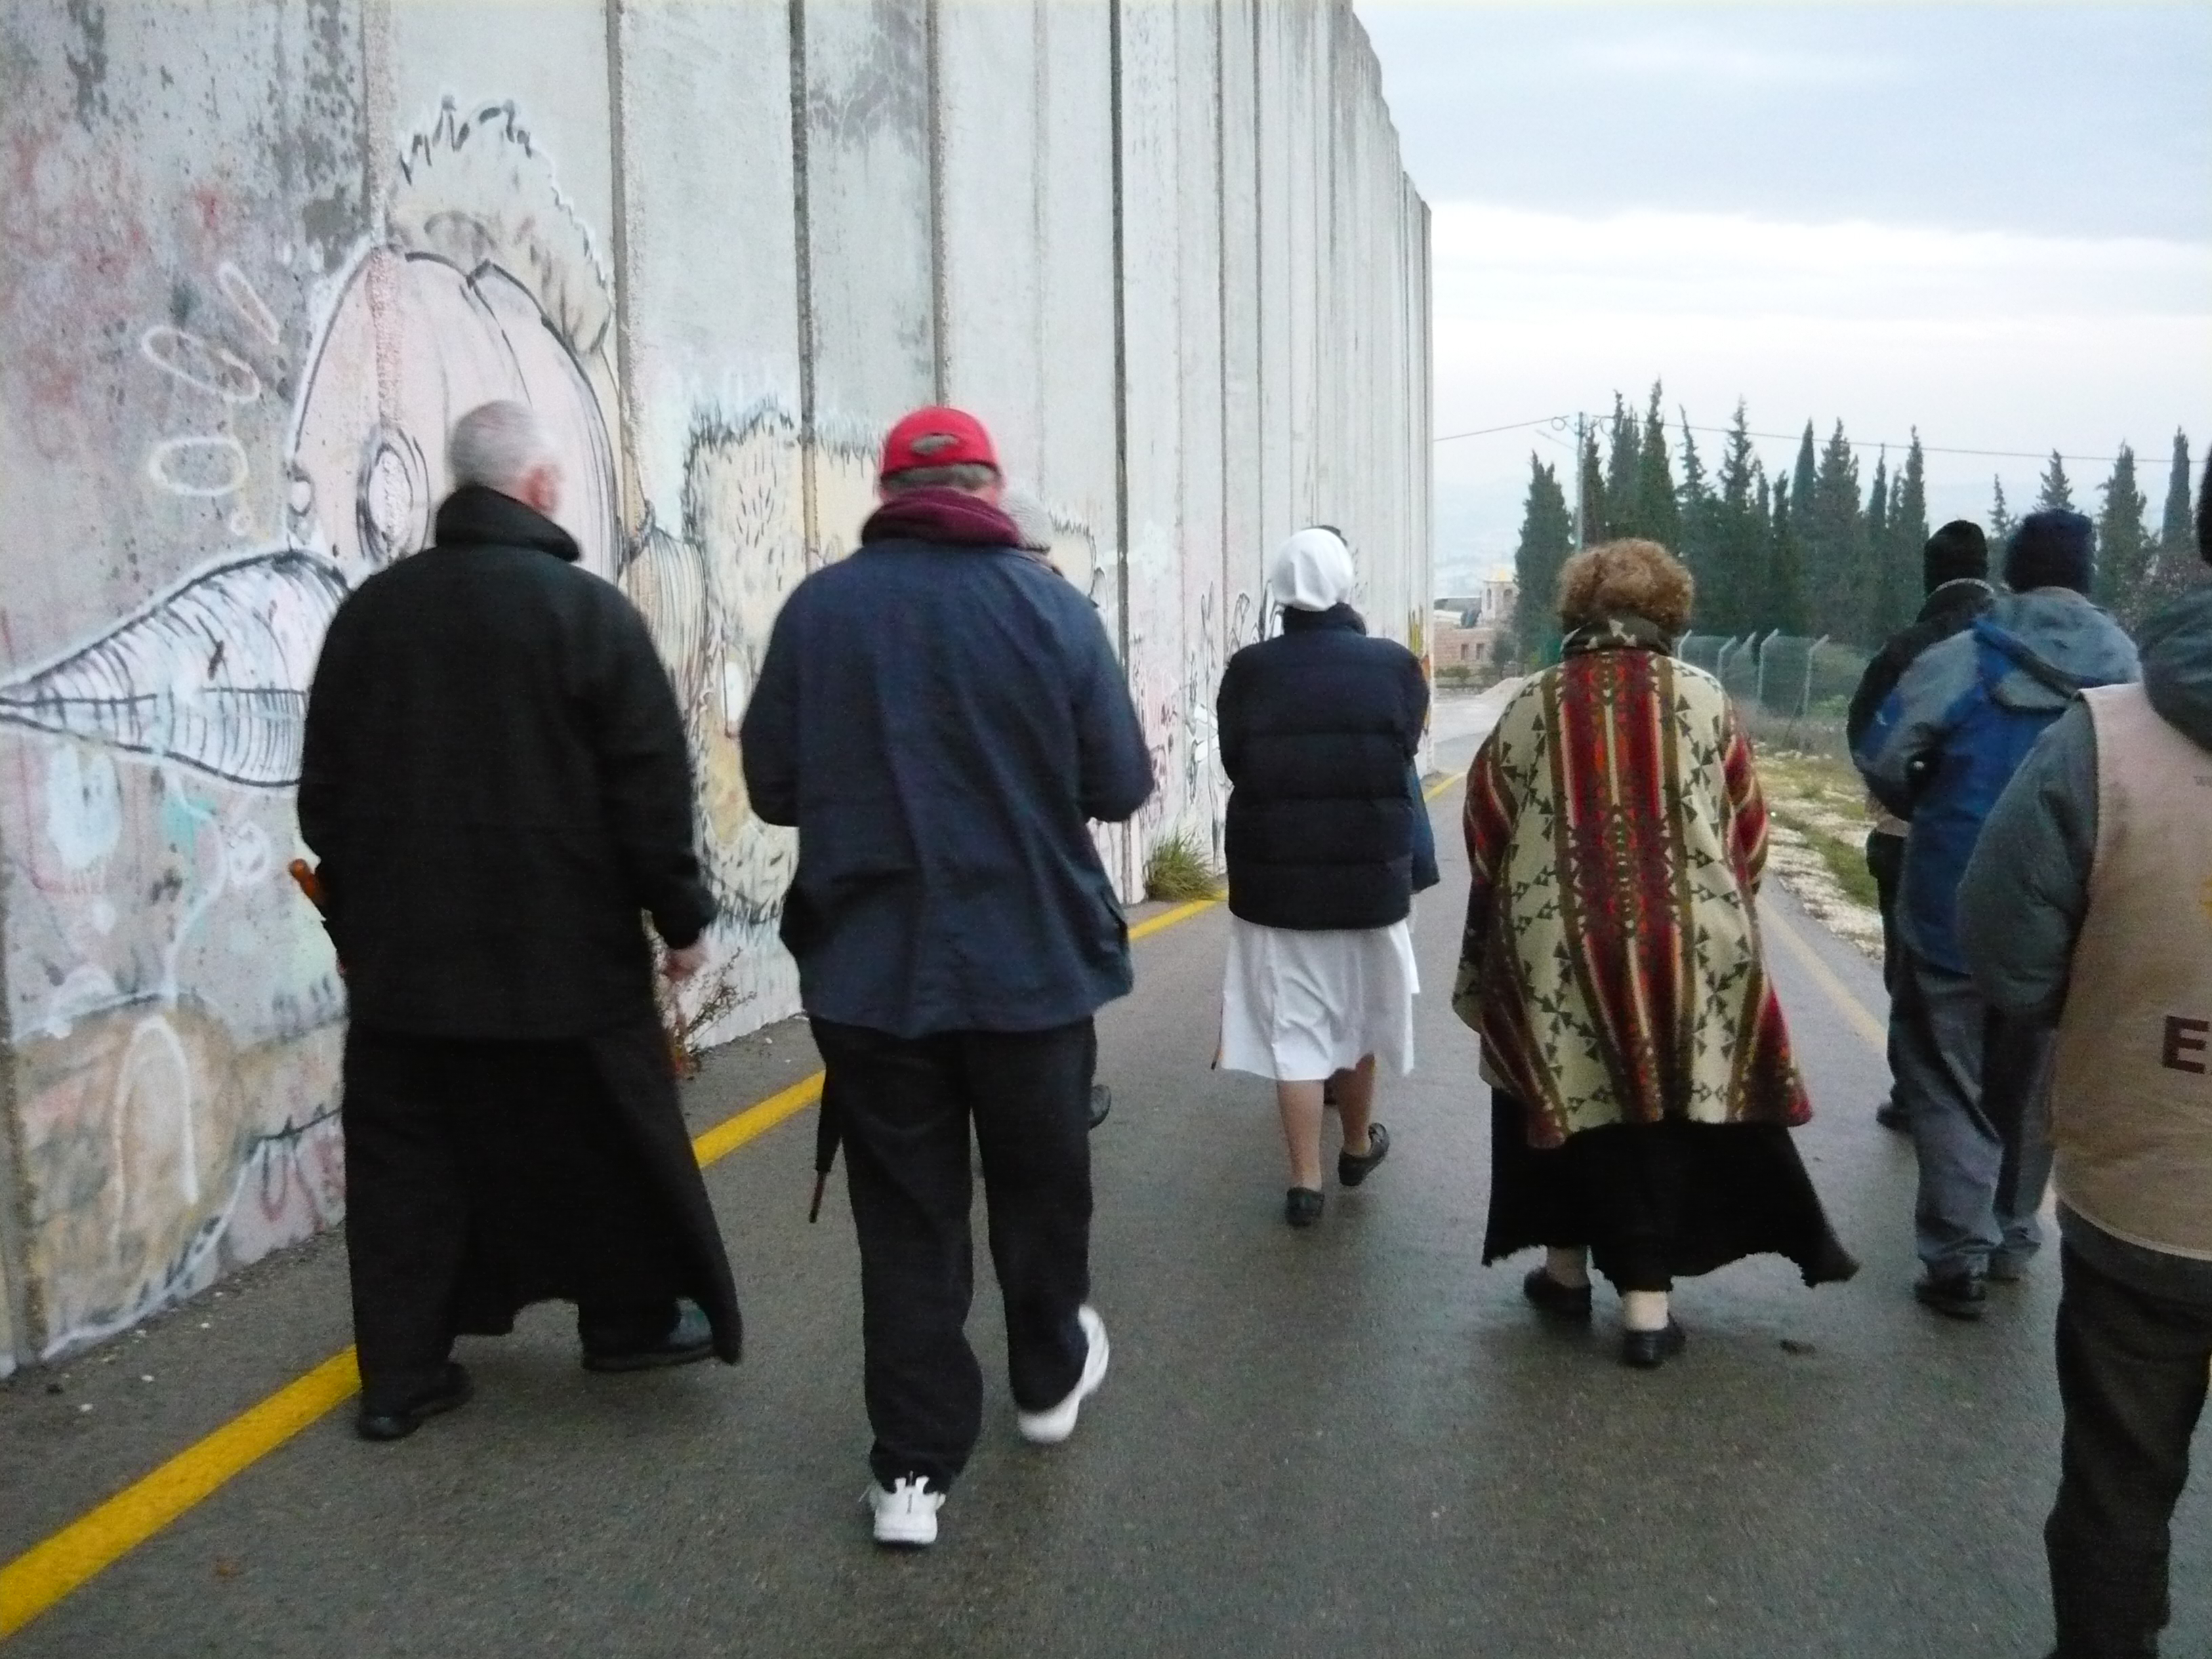 People of faith walking alongside the Separation Barrier